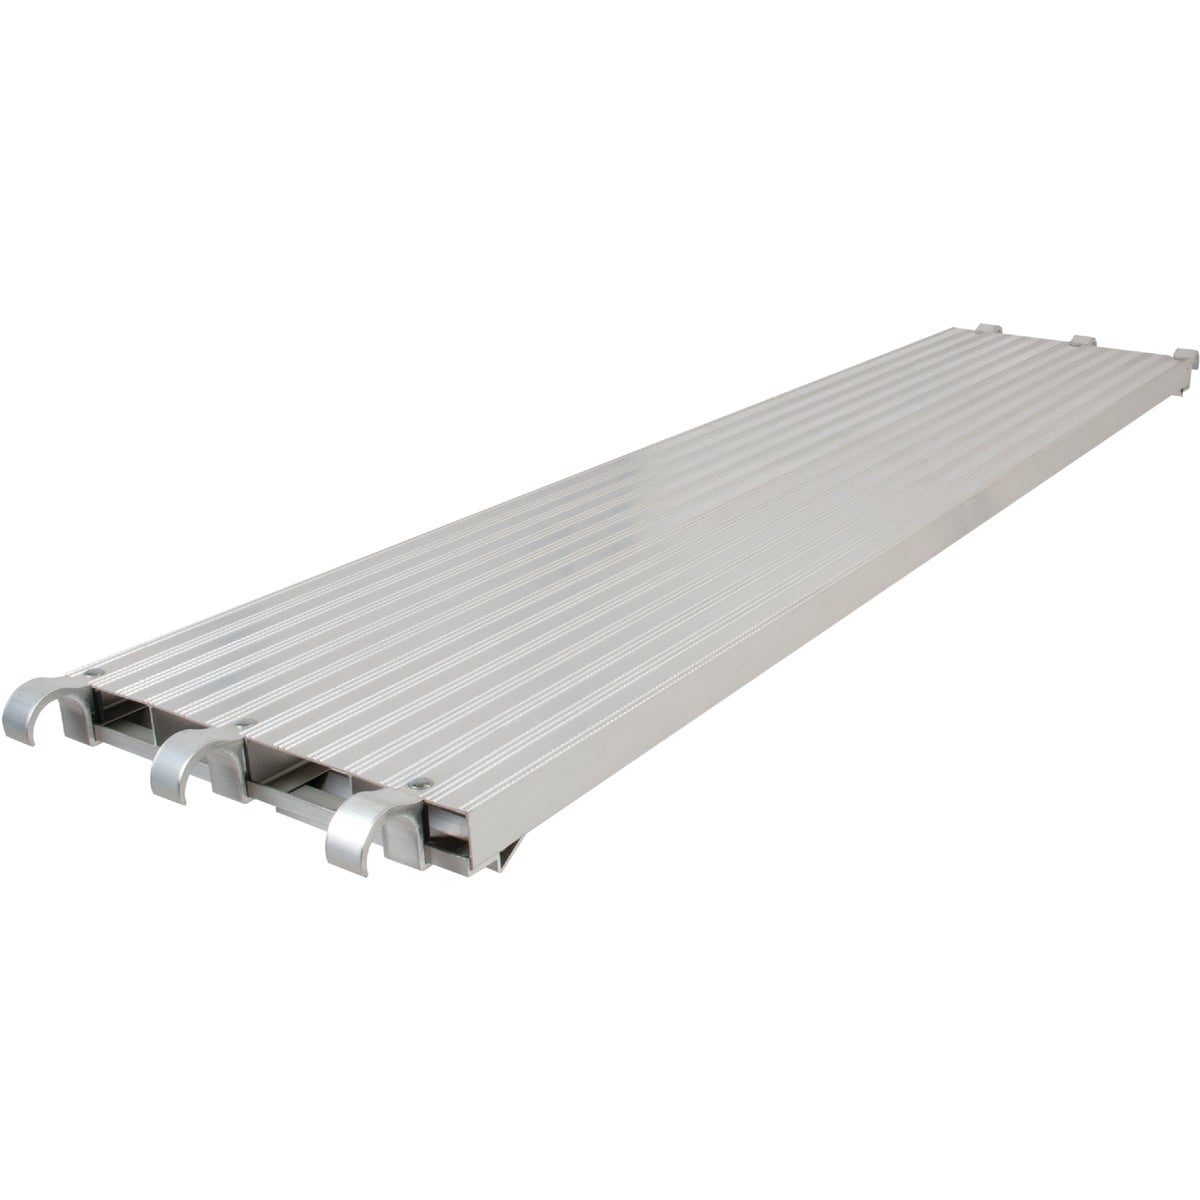 MetalTech 7 Ft. x 19 In. All Aluminum Scaffold Plank Platform